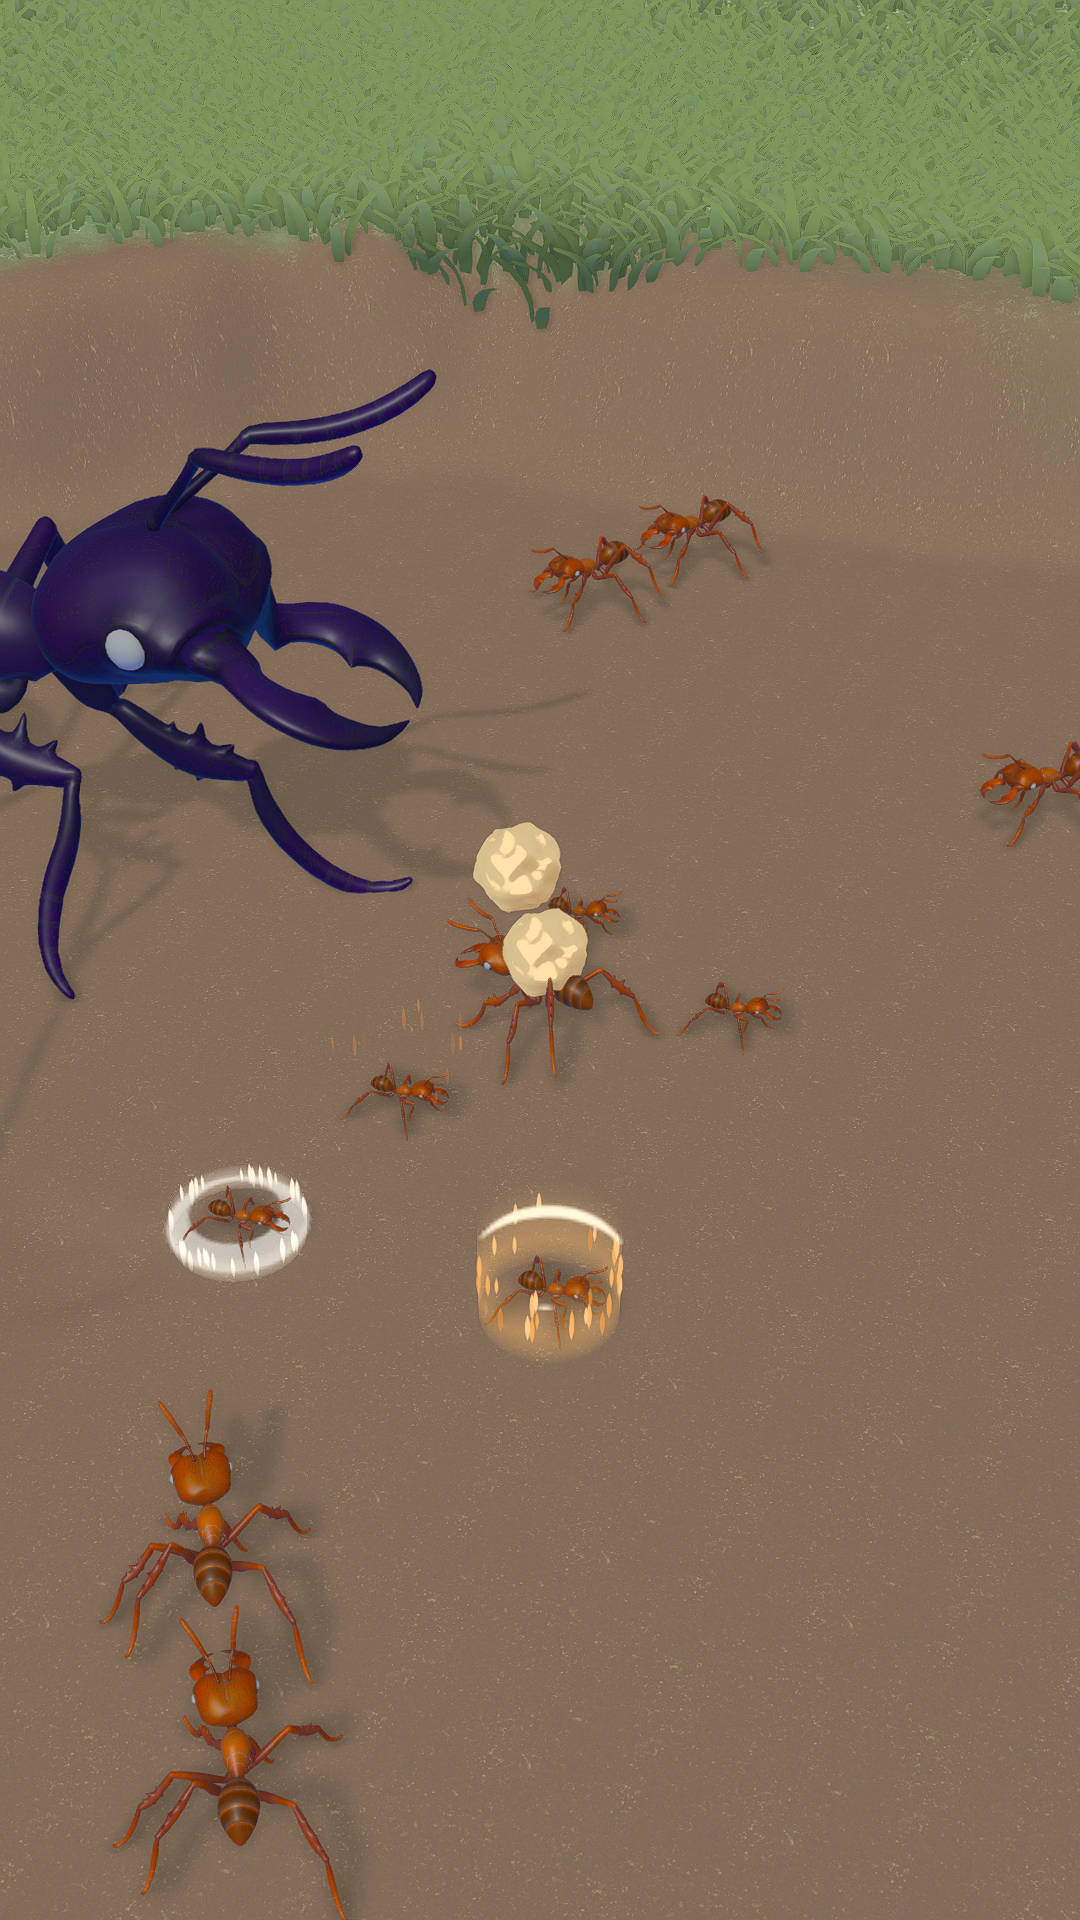 Ant Colony Adventure 게임 스크린 샷